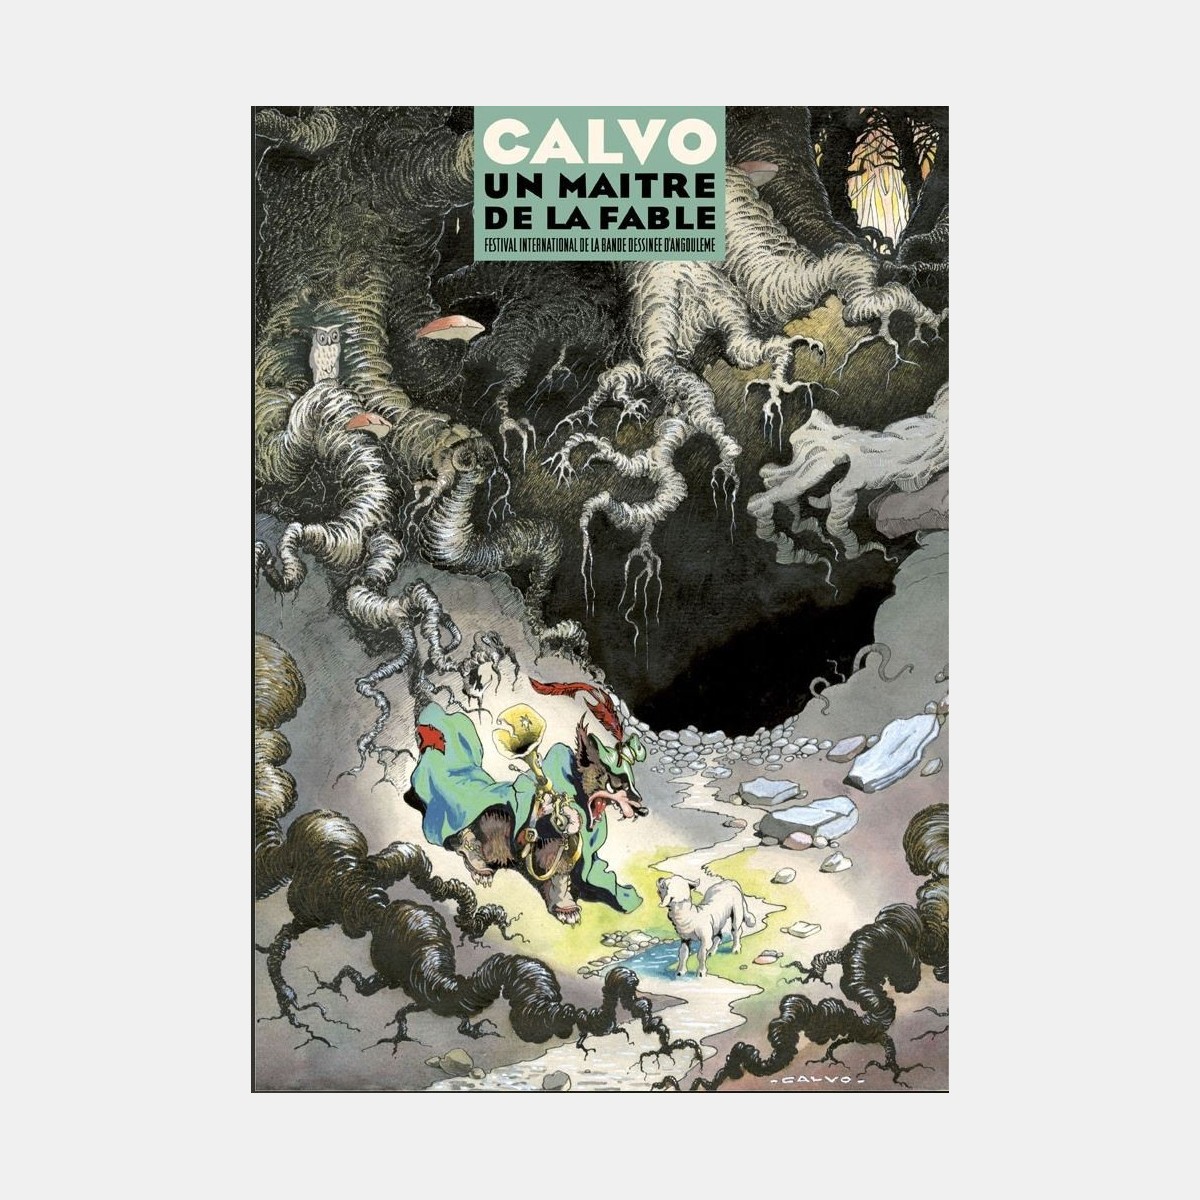 Calvo - un maître de la fable (French)